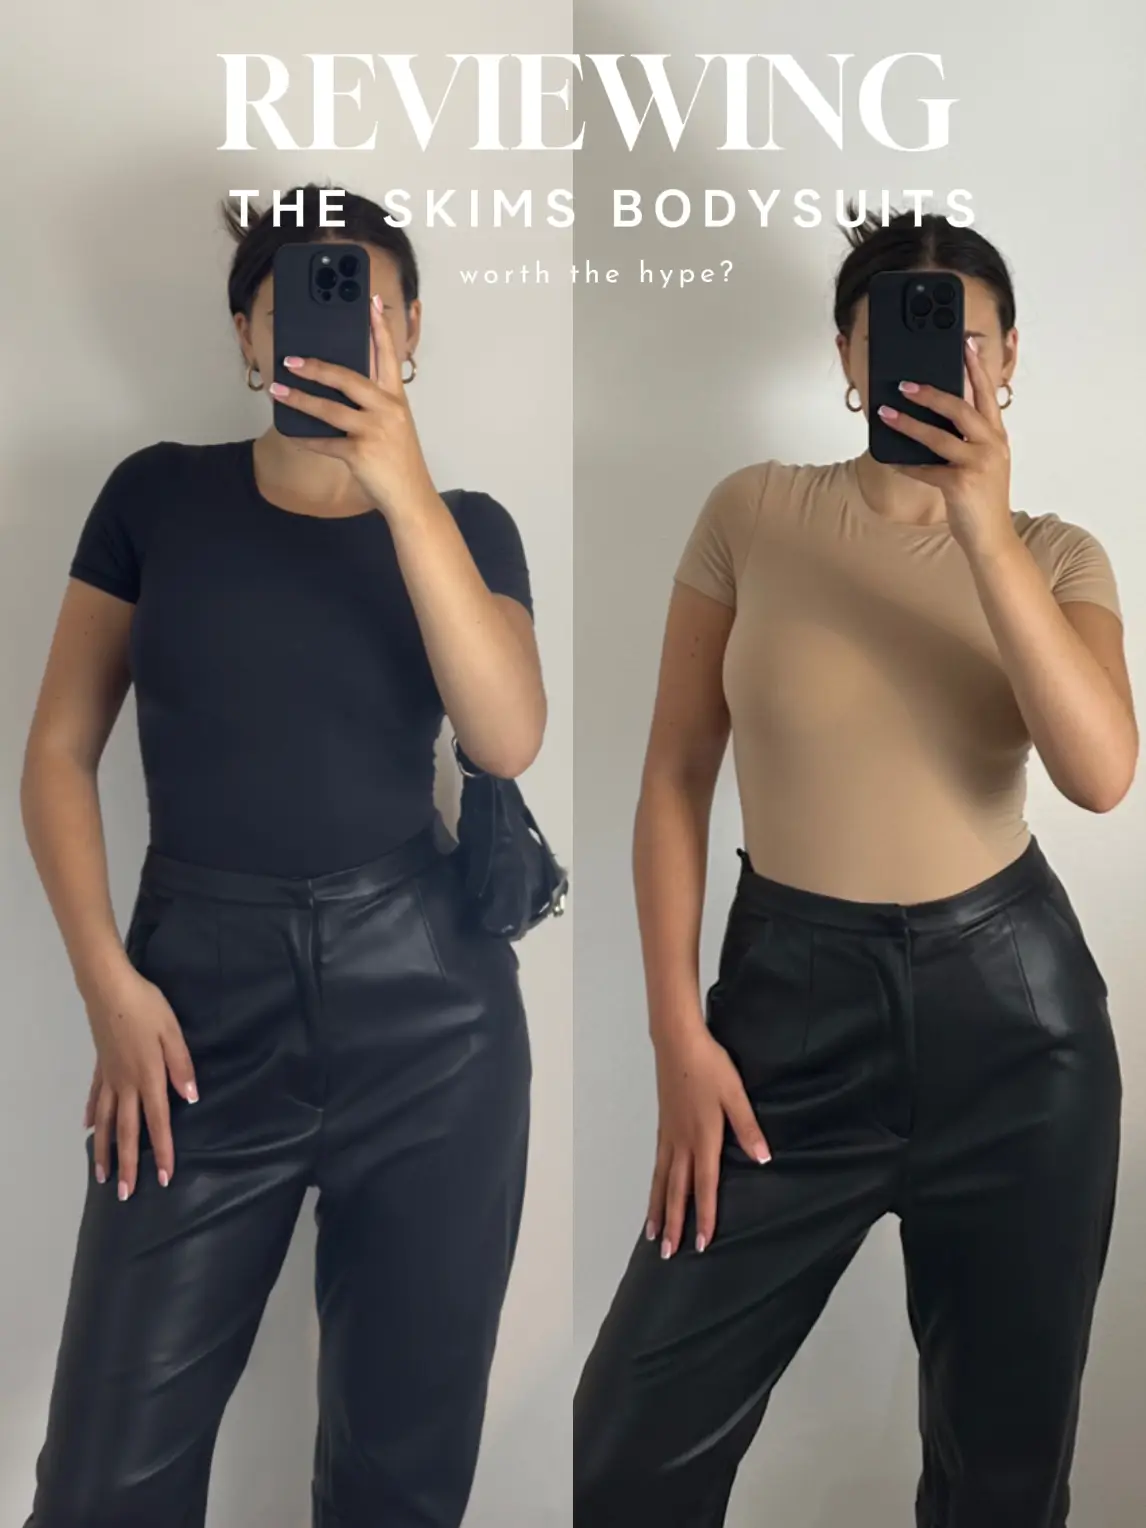 SKIMS Bodysuit Review: Is the SKIMS Sculpting Bodysuit Worth It?